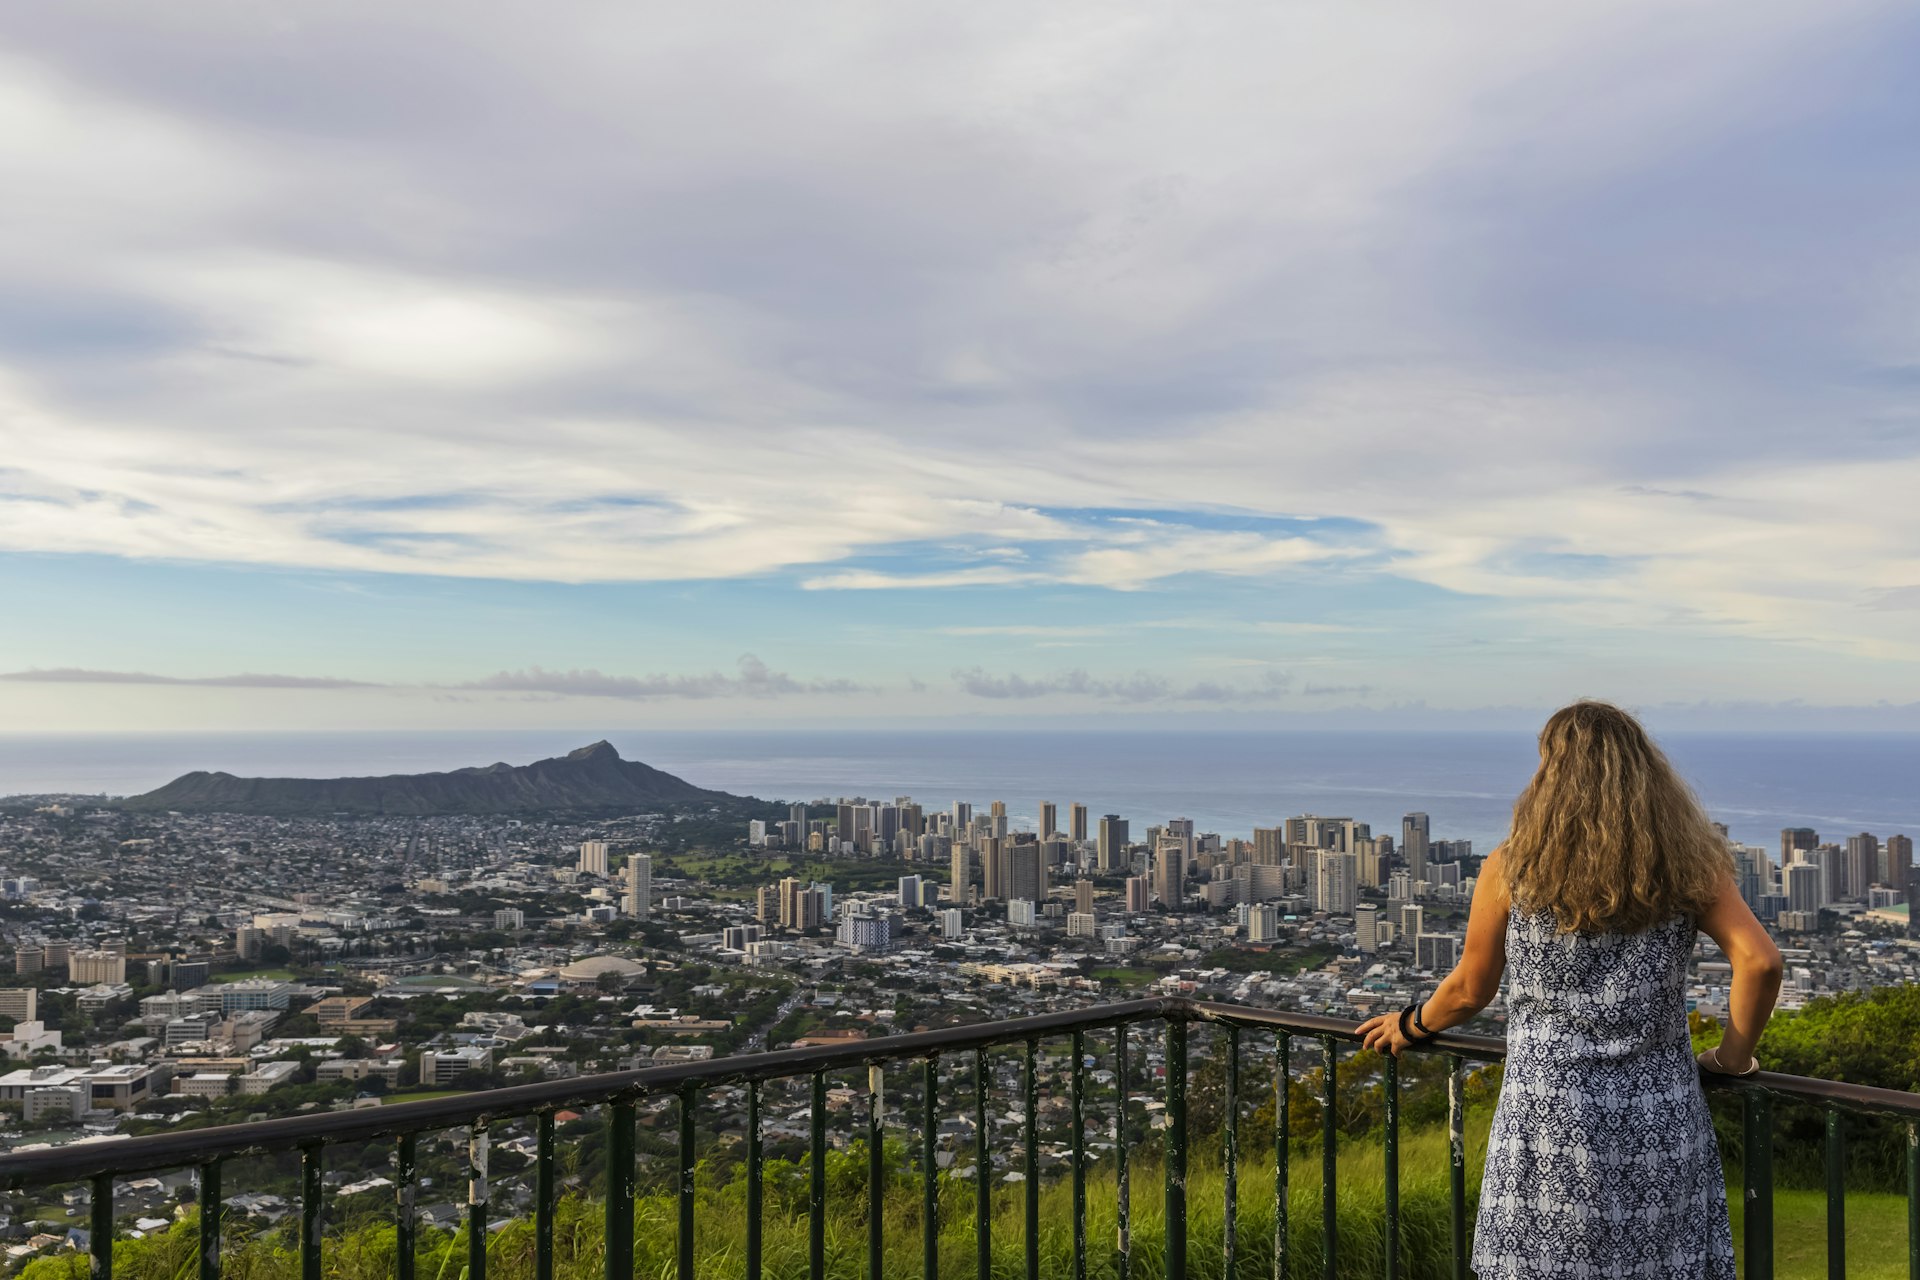 The panoramic views of Honolulu and Diamond Head from Pu‘u ‘Ualaka‘a State Wayside, Hawaii